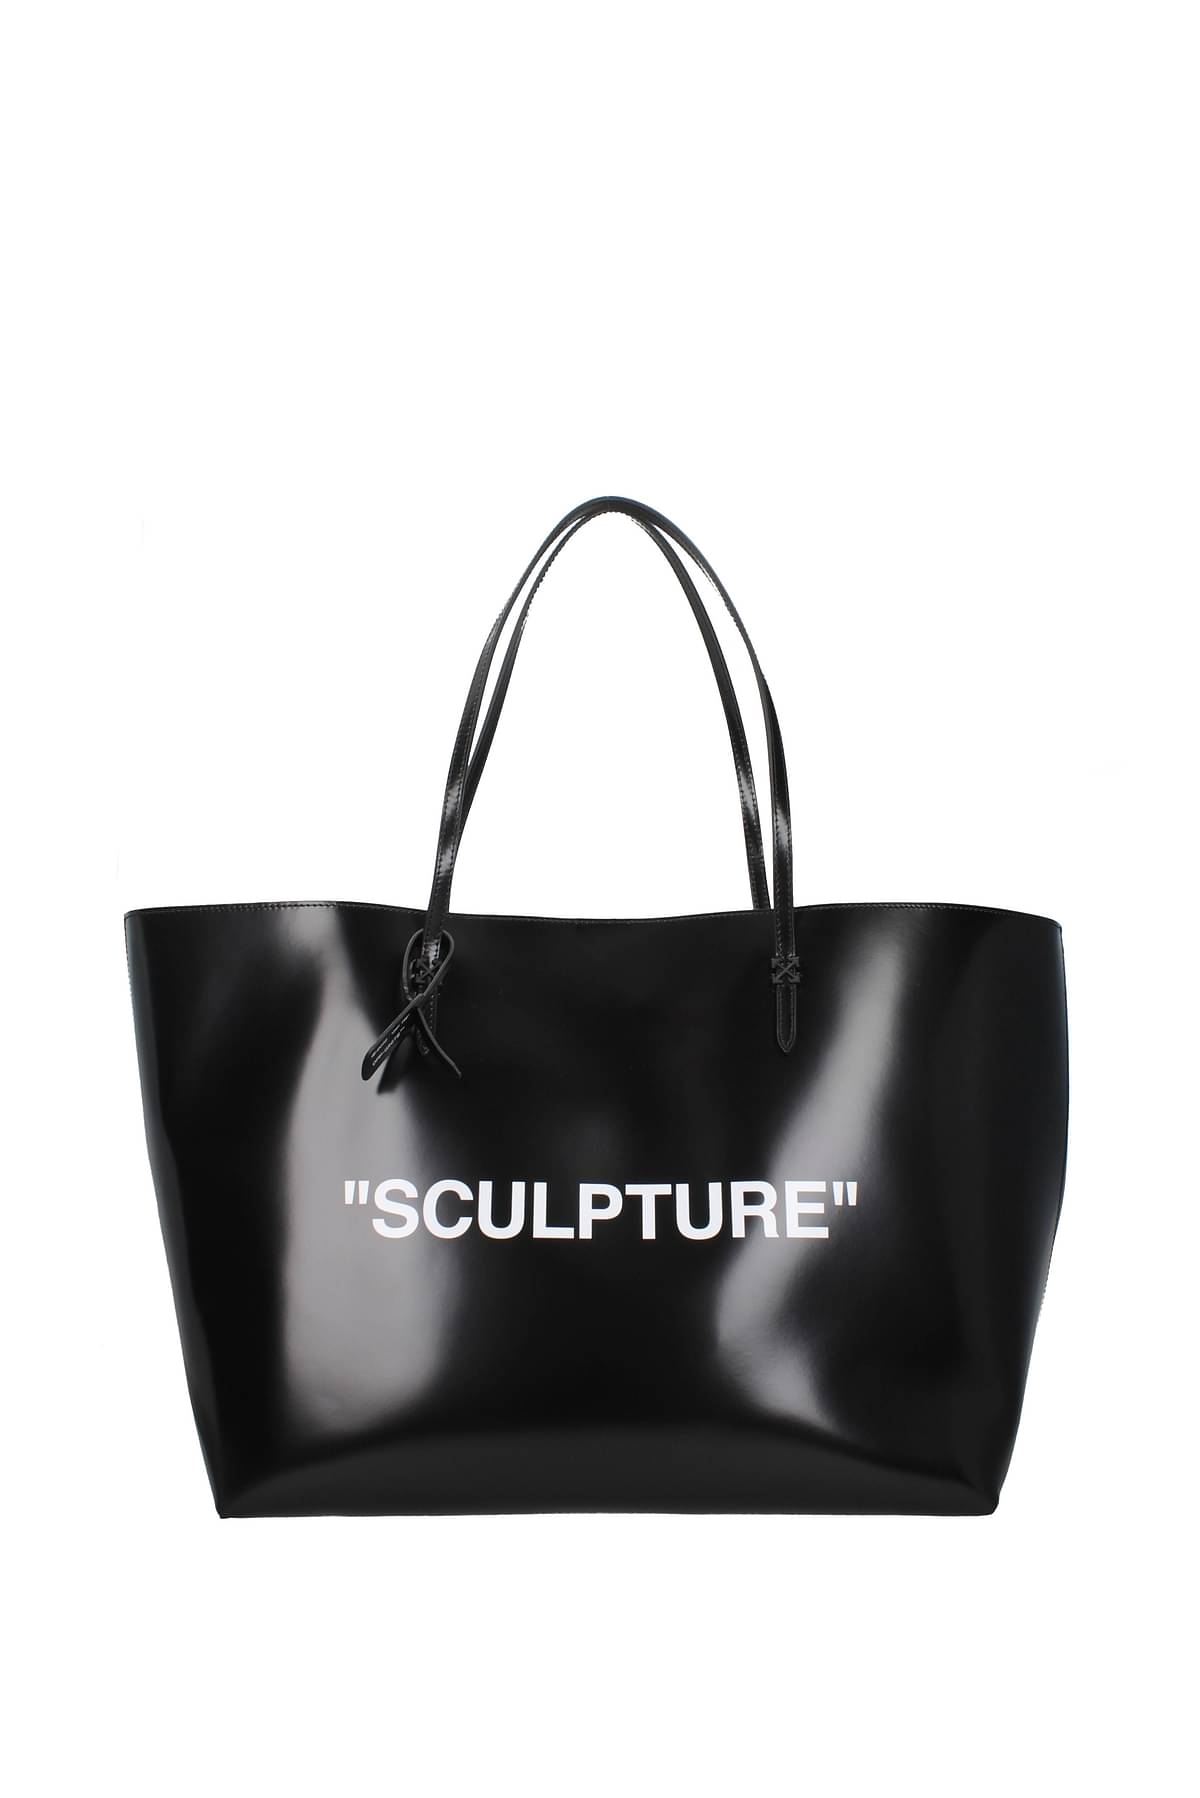 off white sculpture tote bag